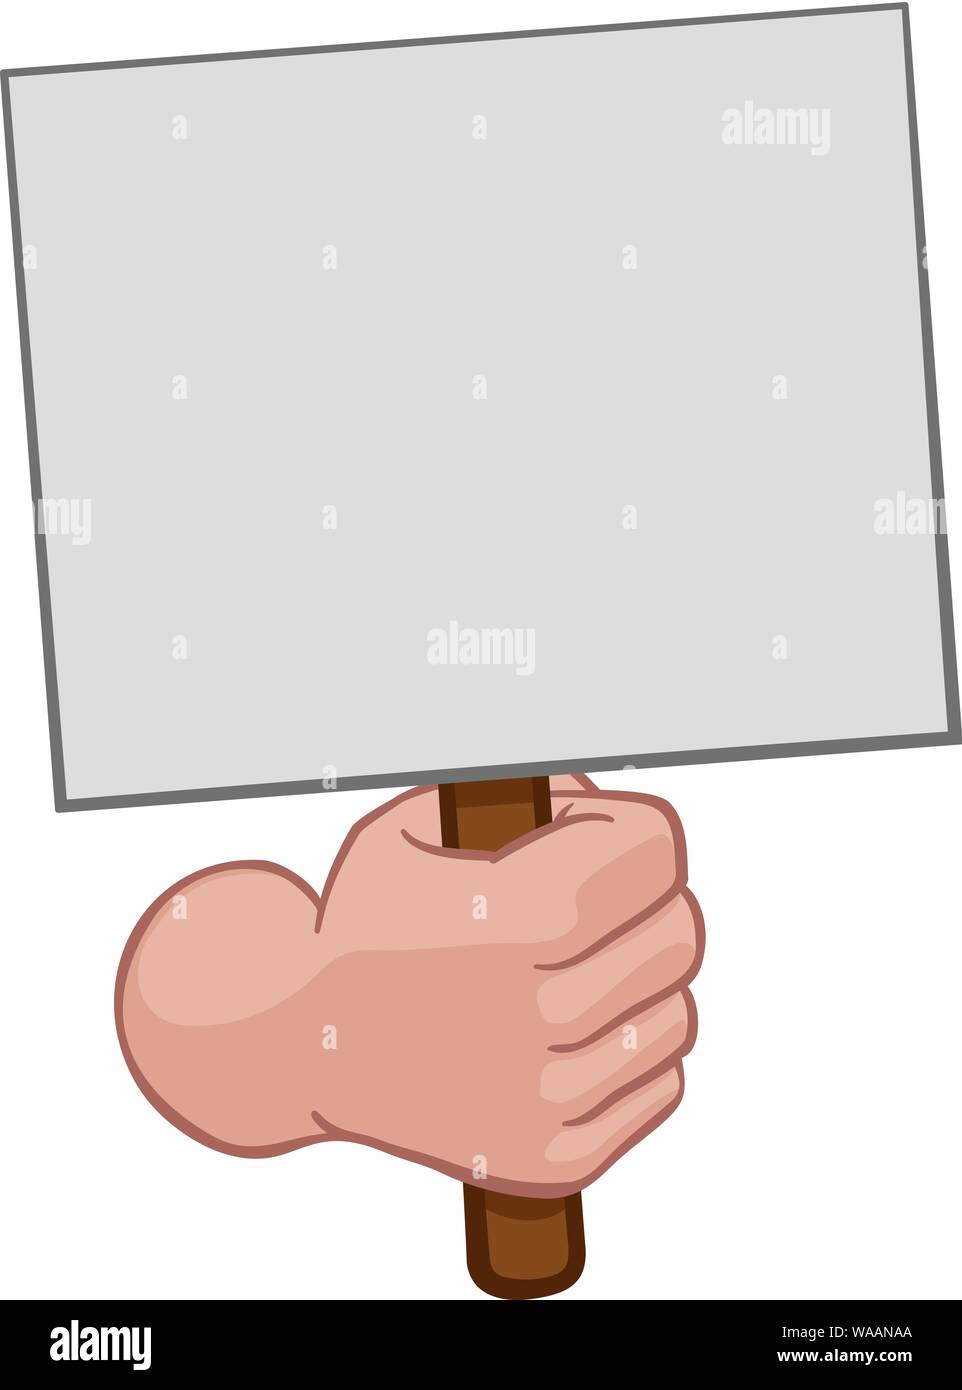 Hand Fist Holding a Blank Sign or Placard Cartoon Stock Vector